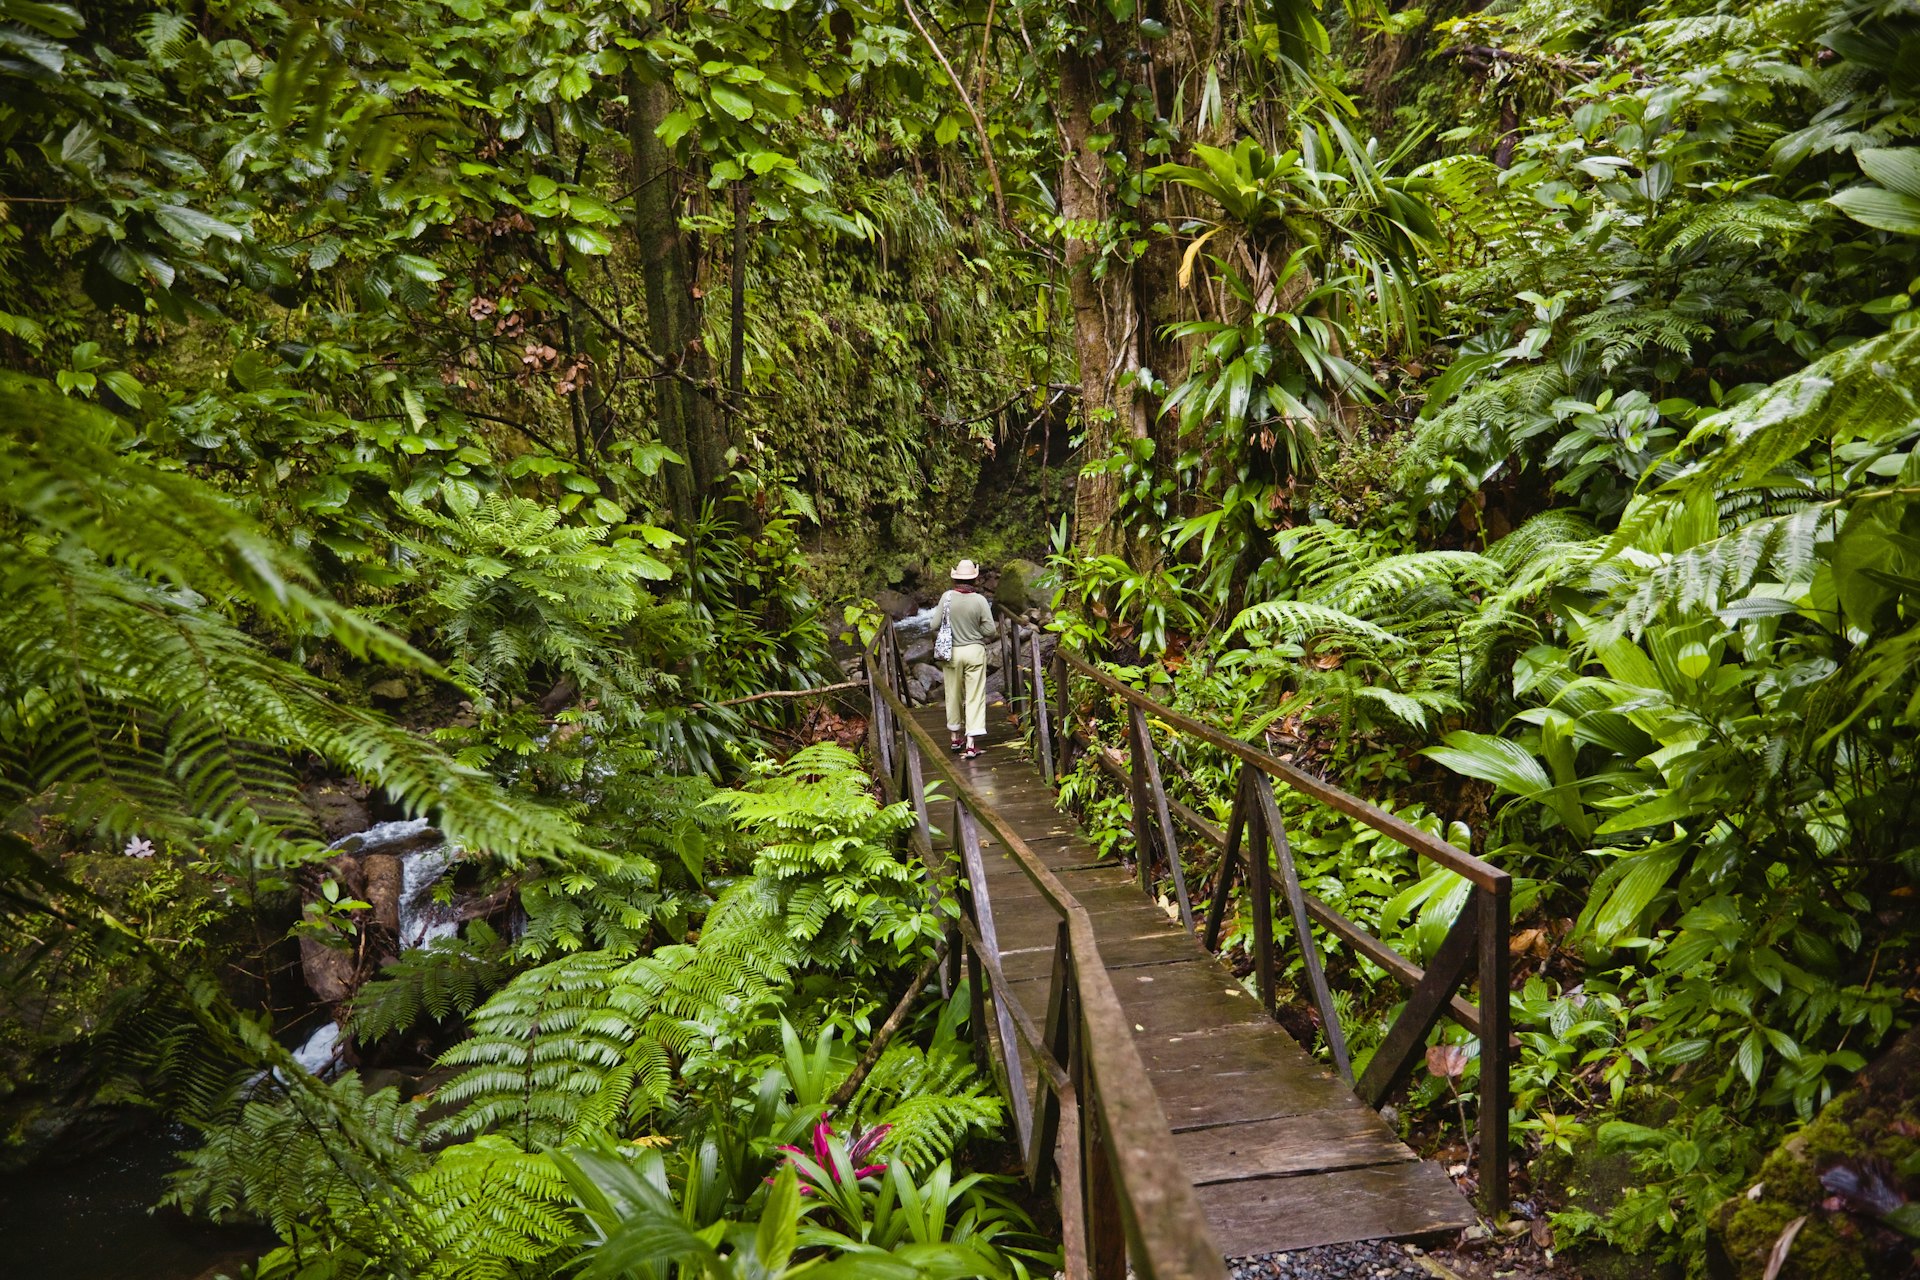 A woman stands on a board walk that cuts through a dense rainforest landscape